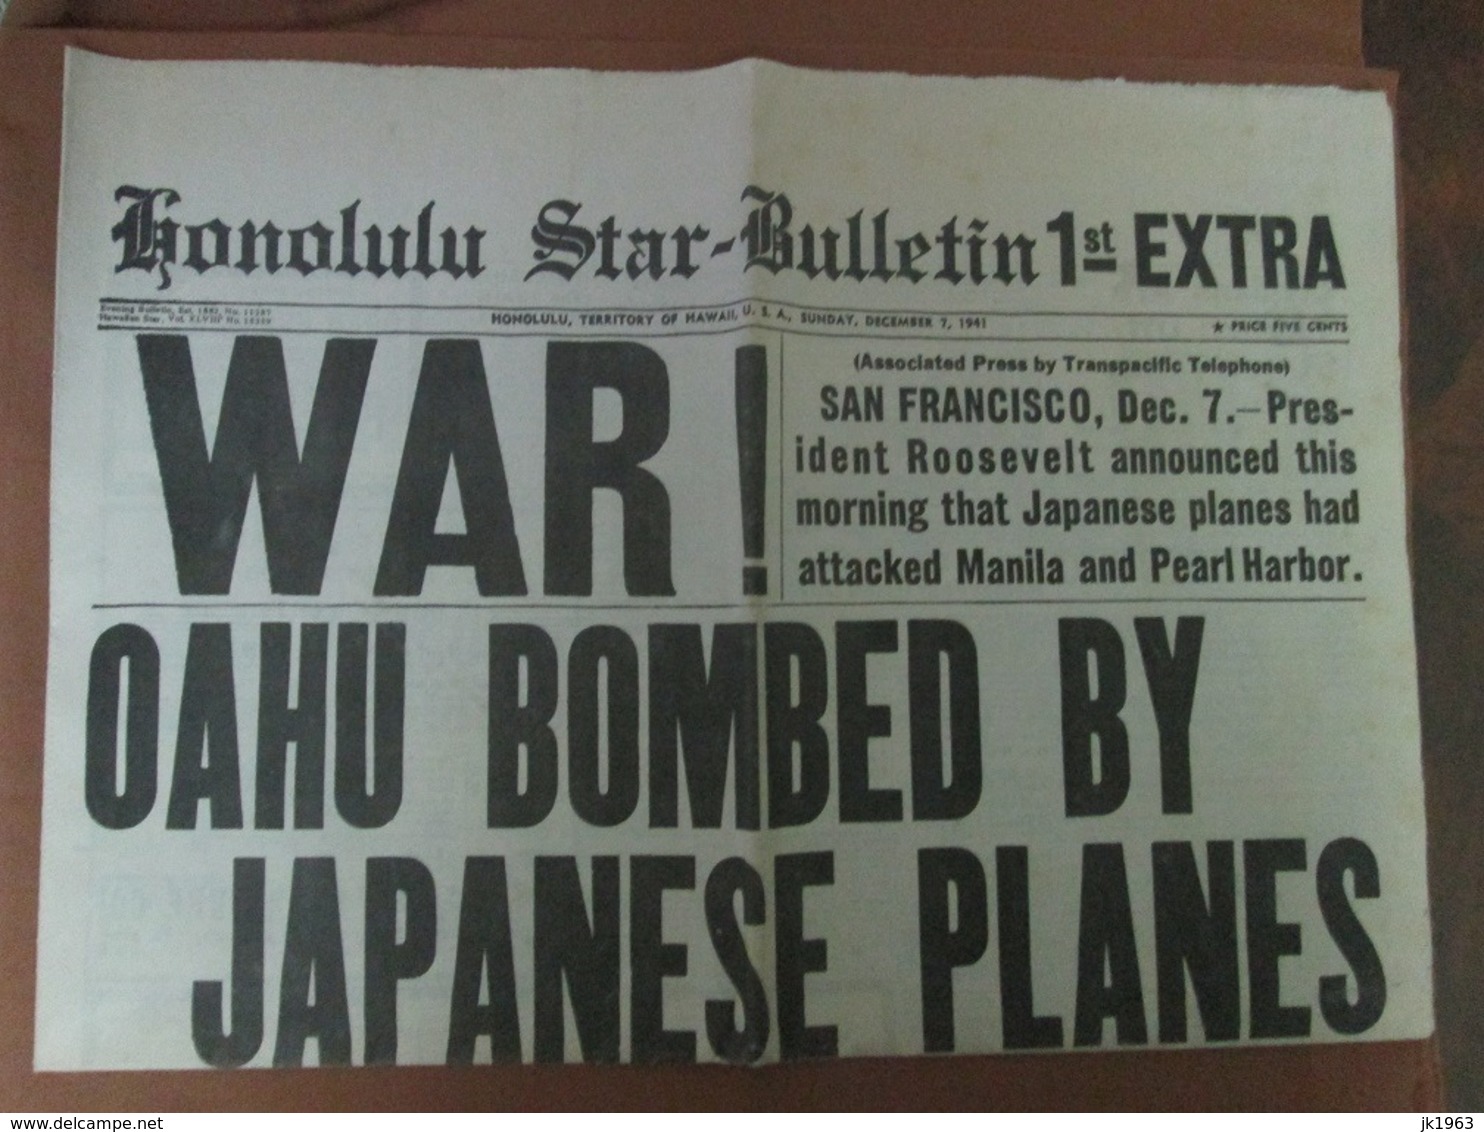 Honolulu Star-Bulletin 1st, 2nd & 3rd Extra December 7 1941 Pearl Harbor Reprint - Military/ War